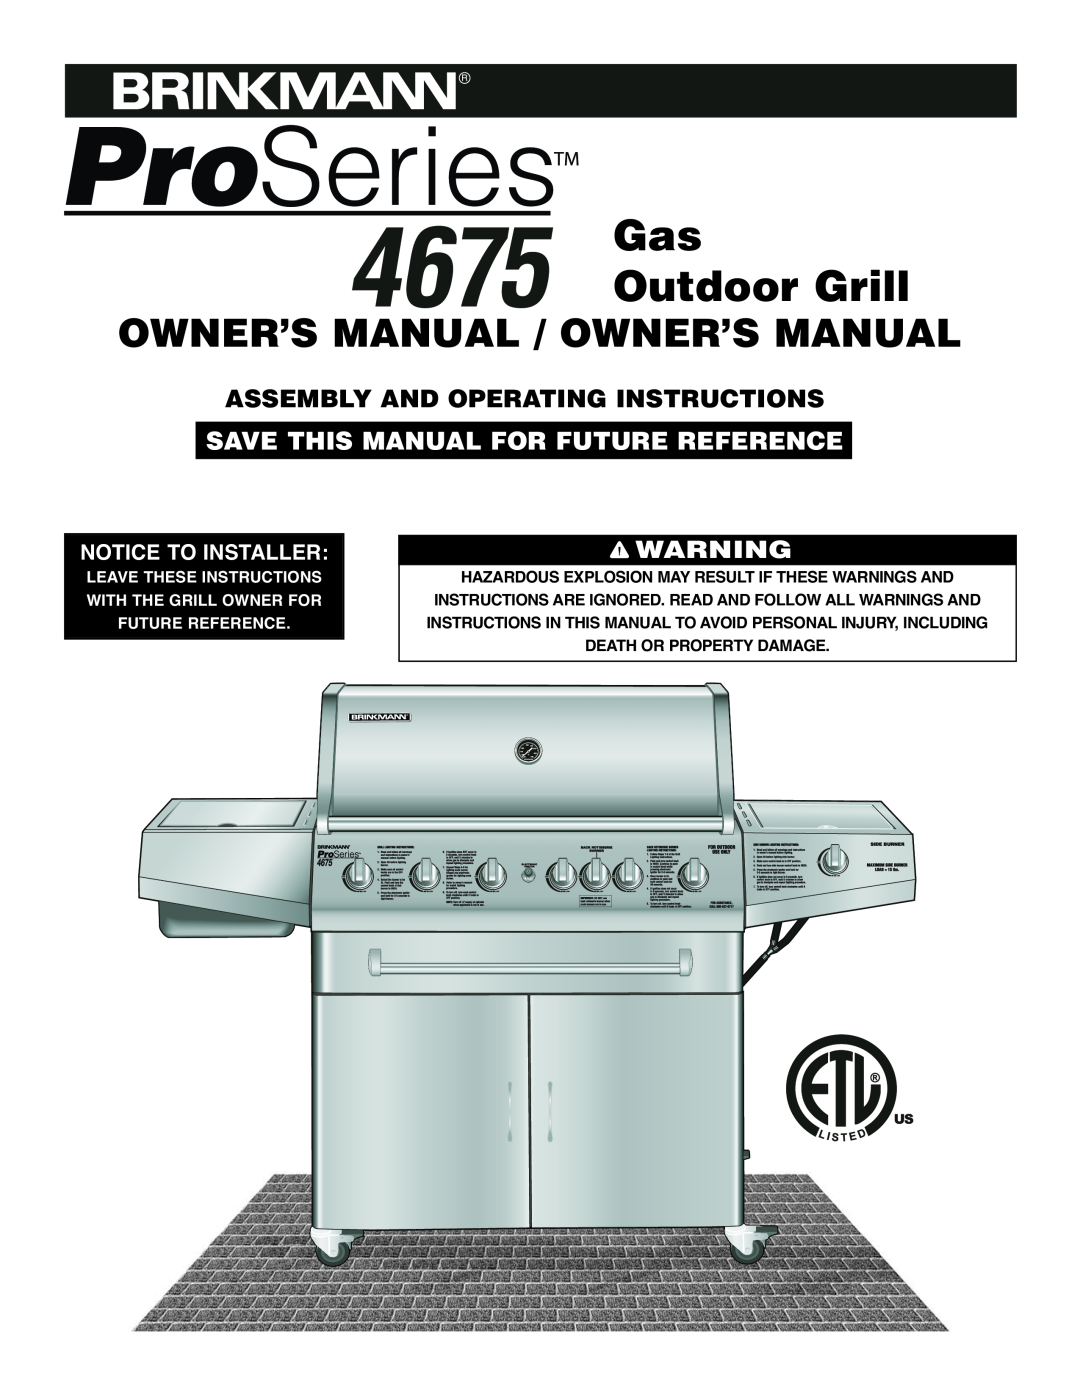 Brinkmann ProSeries 4675 owner manual Gas Outdoor Grill, Owner’S Manual / Owner’S Manual, Notice To Installer 